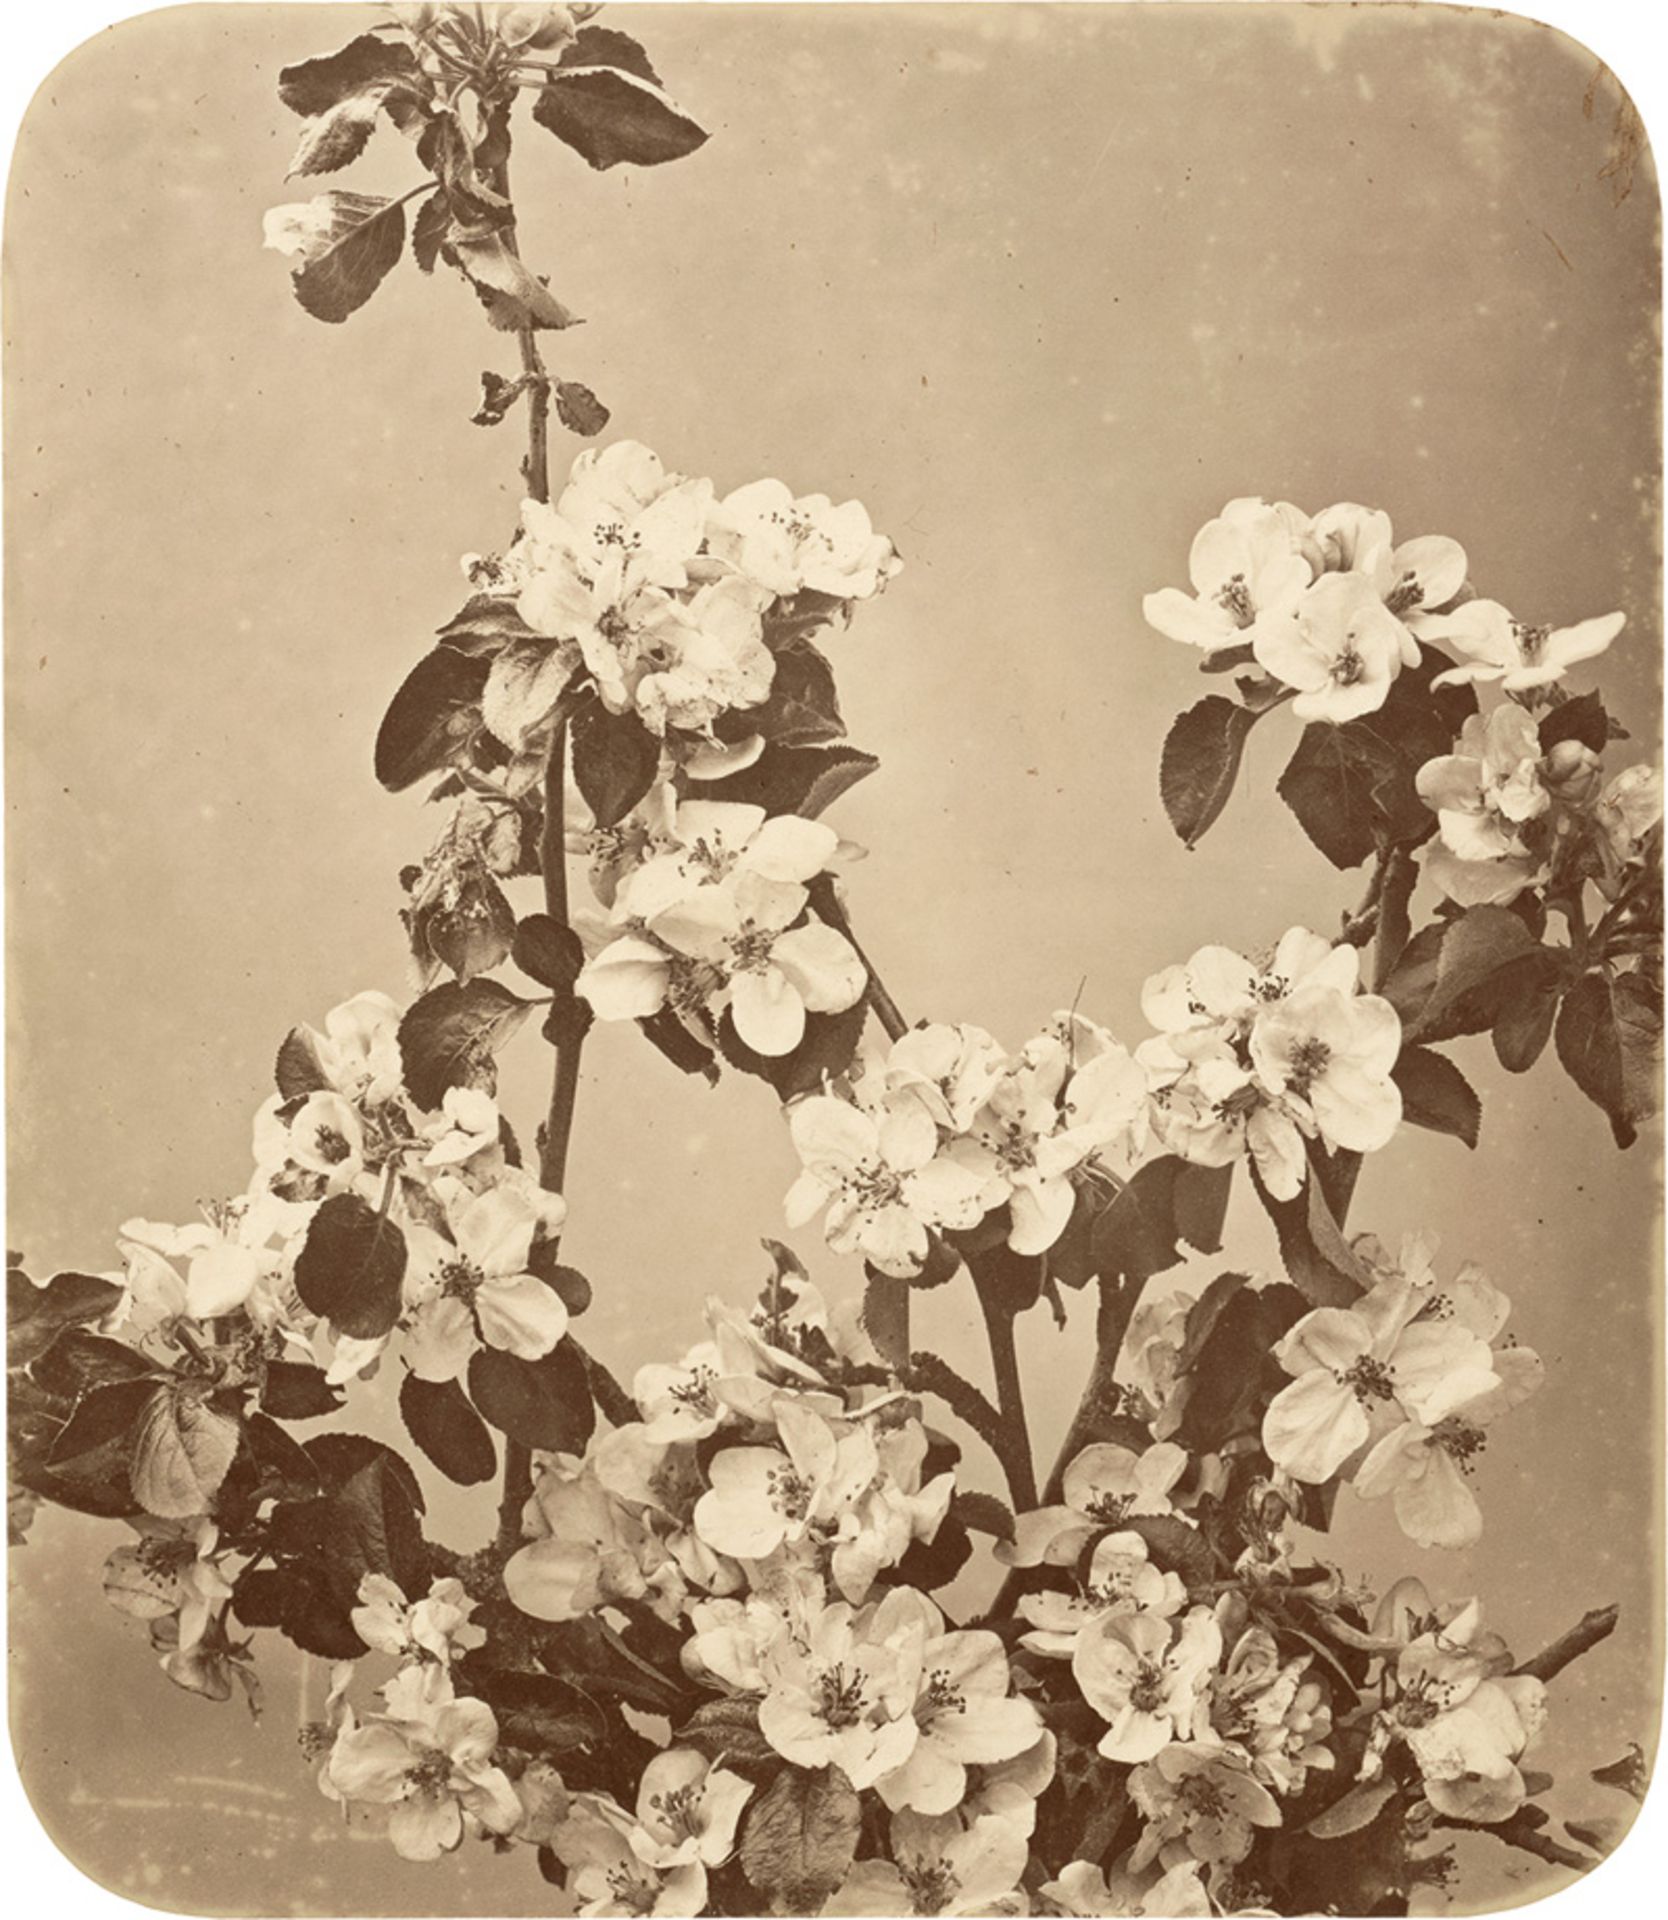 Braun, Adolphe: Apple blossoms